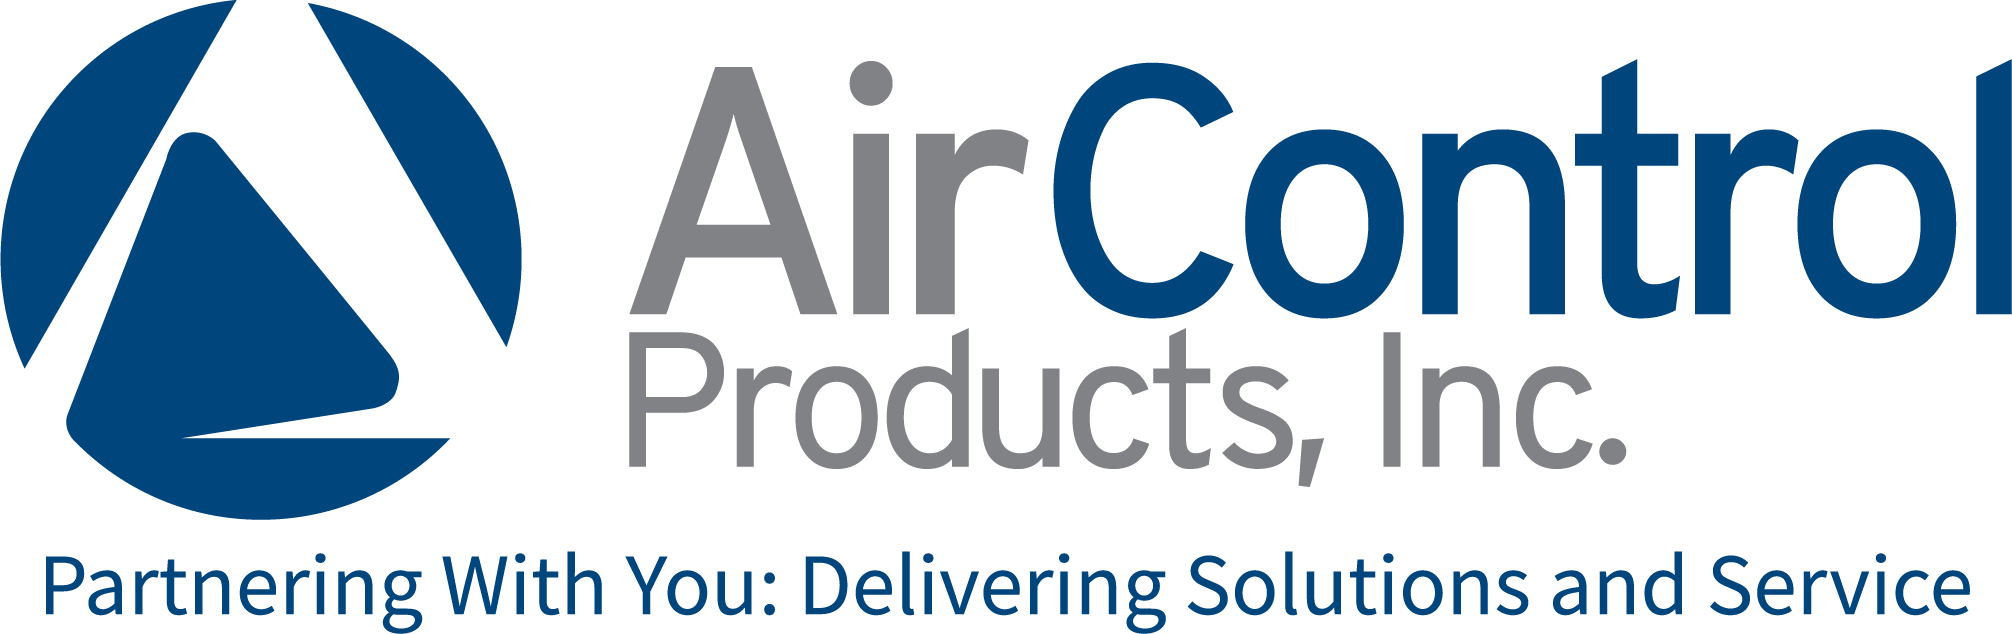 Air Control Products, Inc. logo